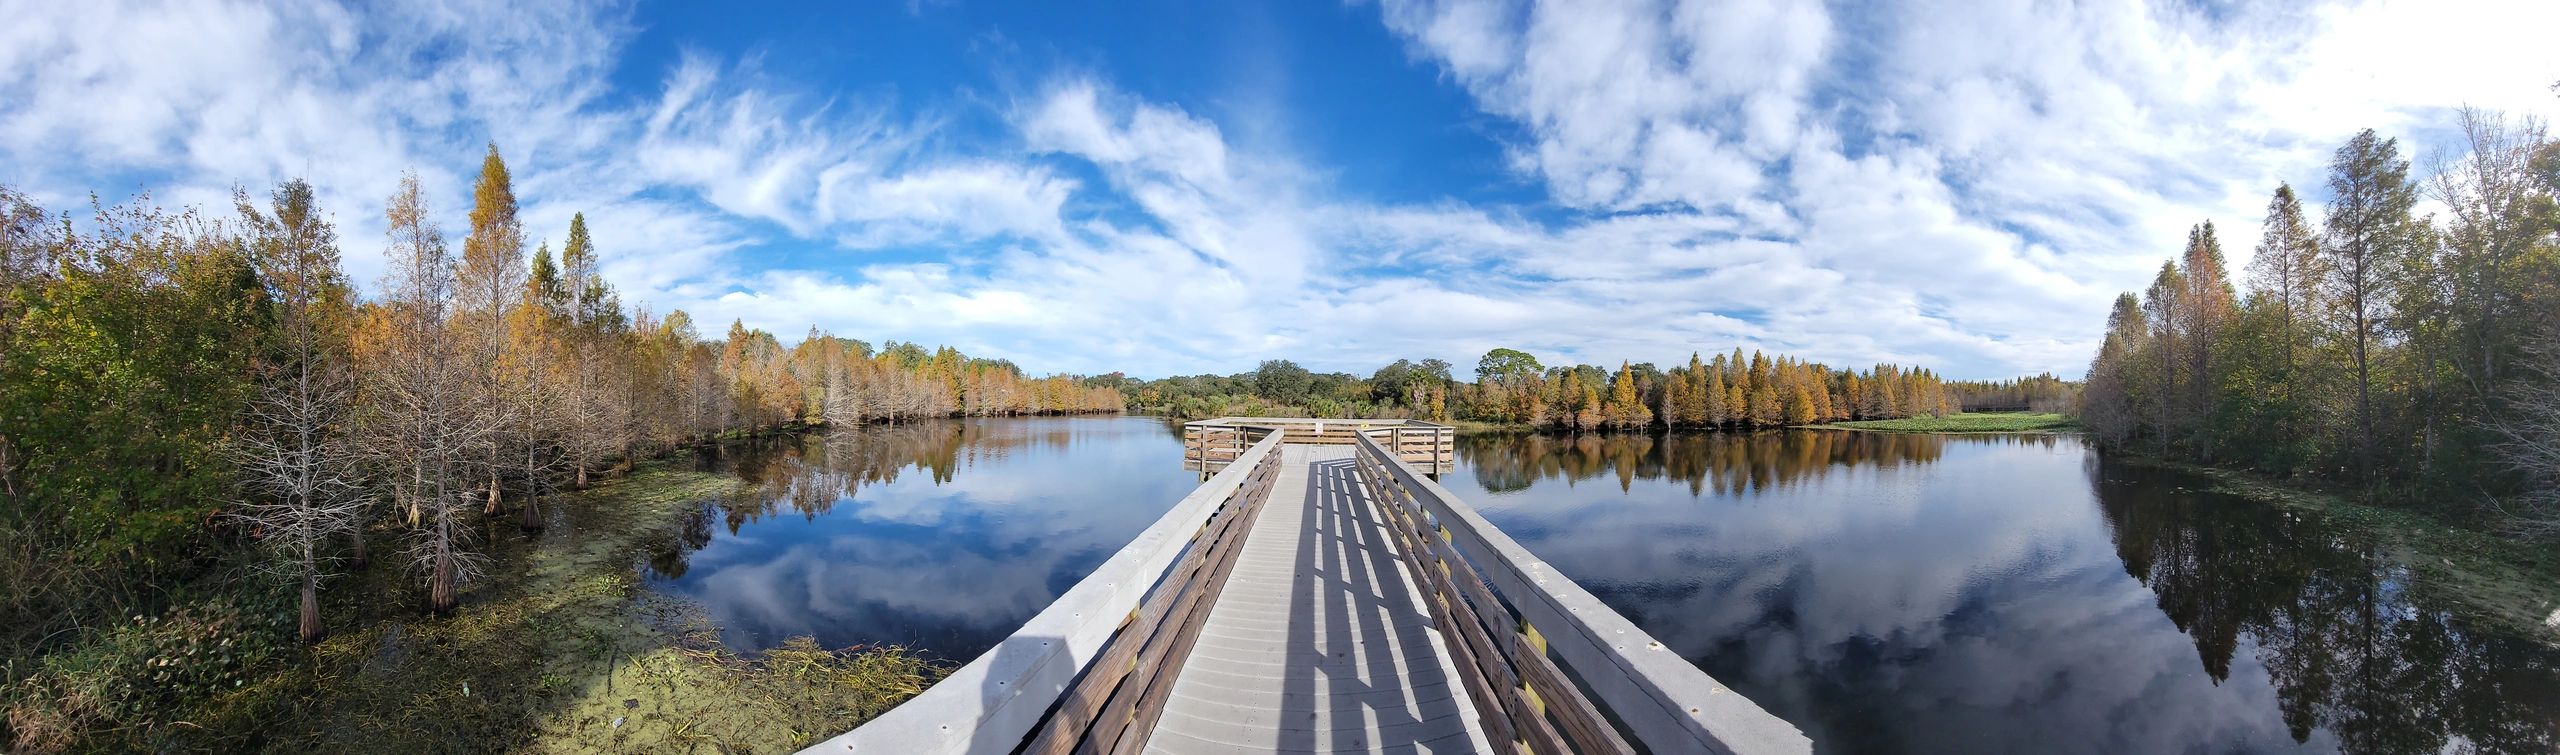 Kapok Park, Safety Harbor, Florida - Panorama Photo